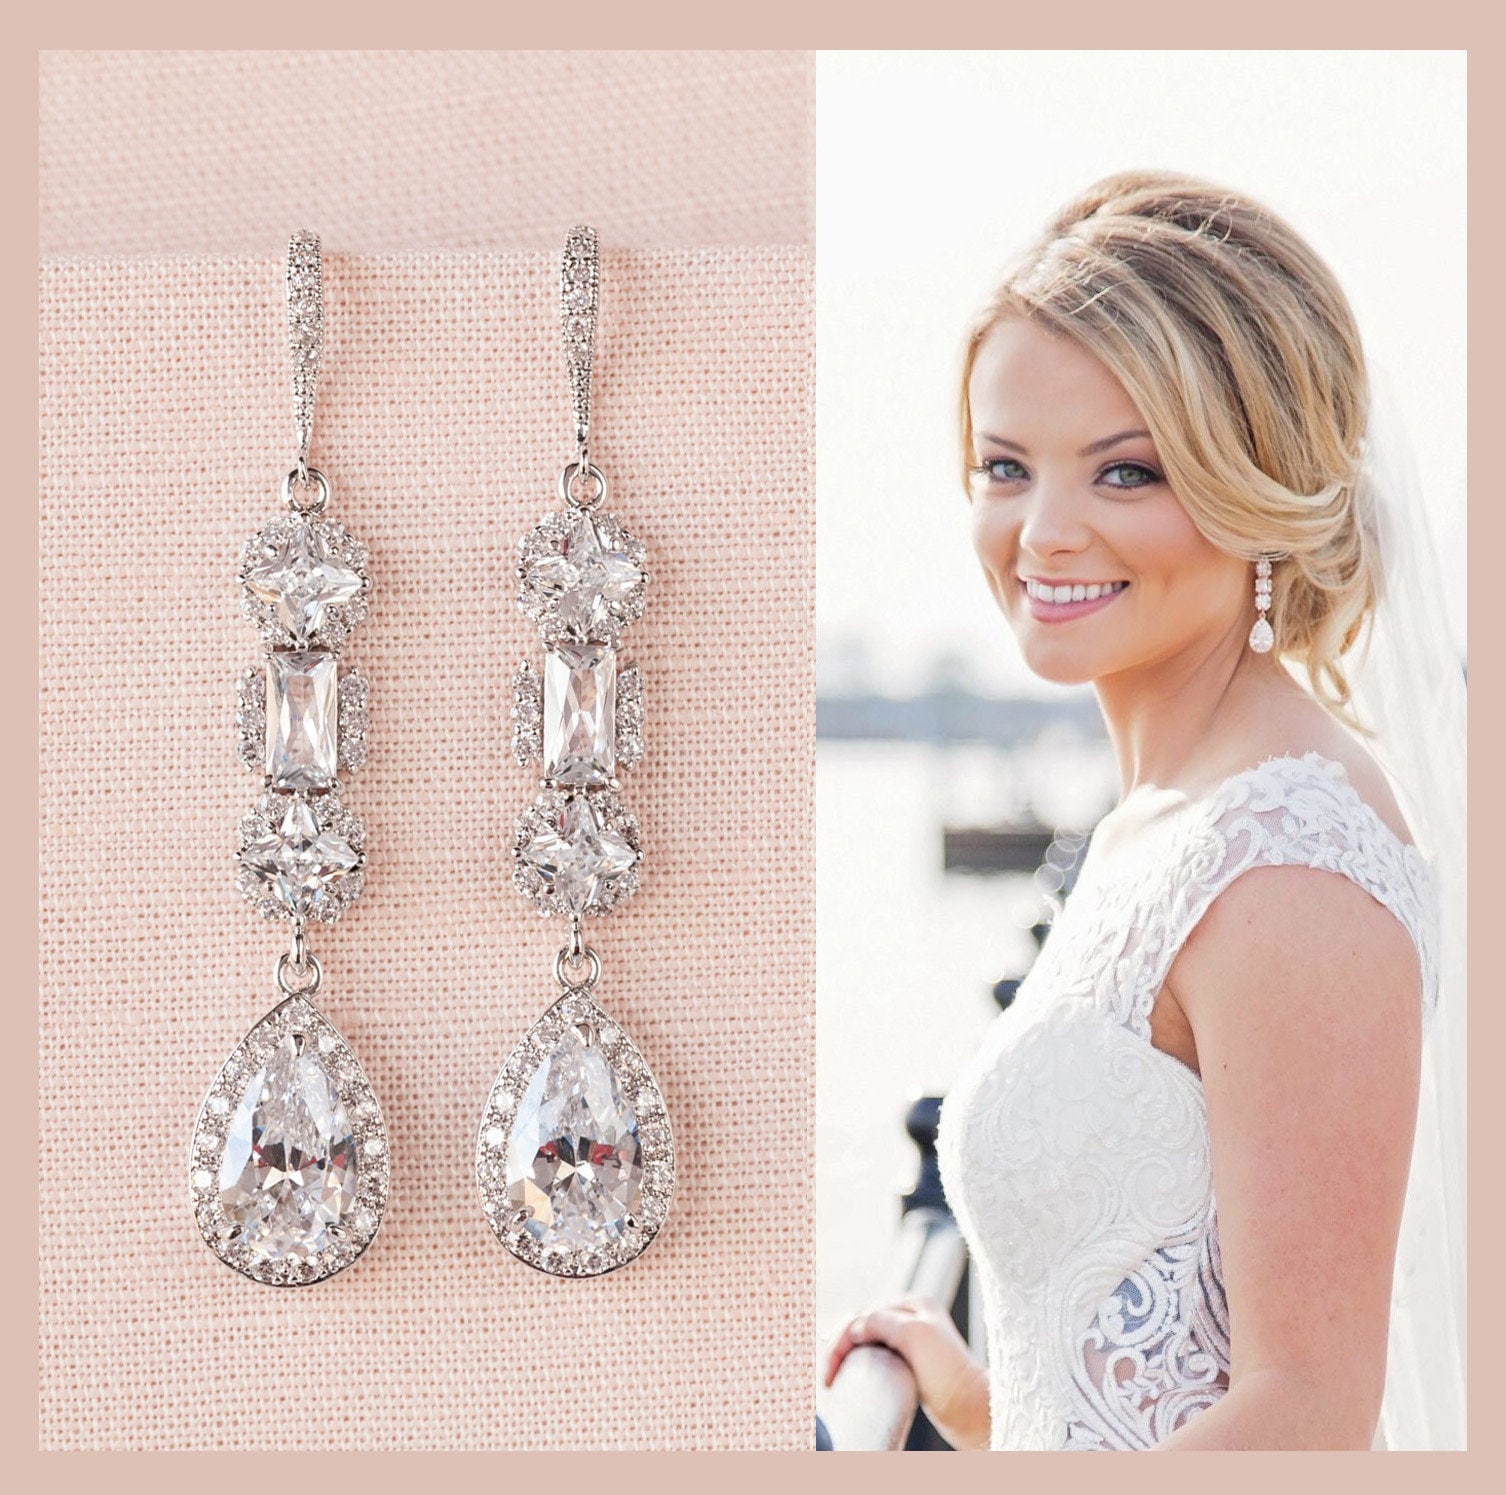 Crystal bridal bow earrings - Dramatic crystal double bow earrings